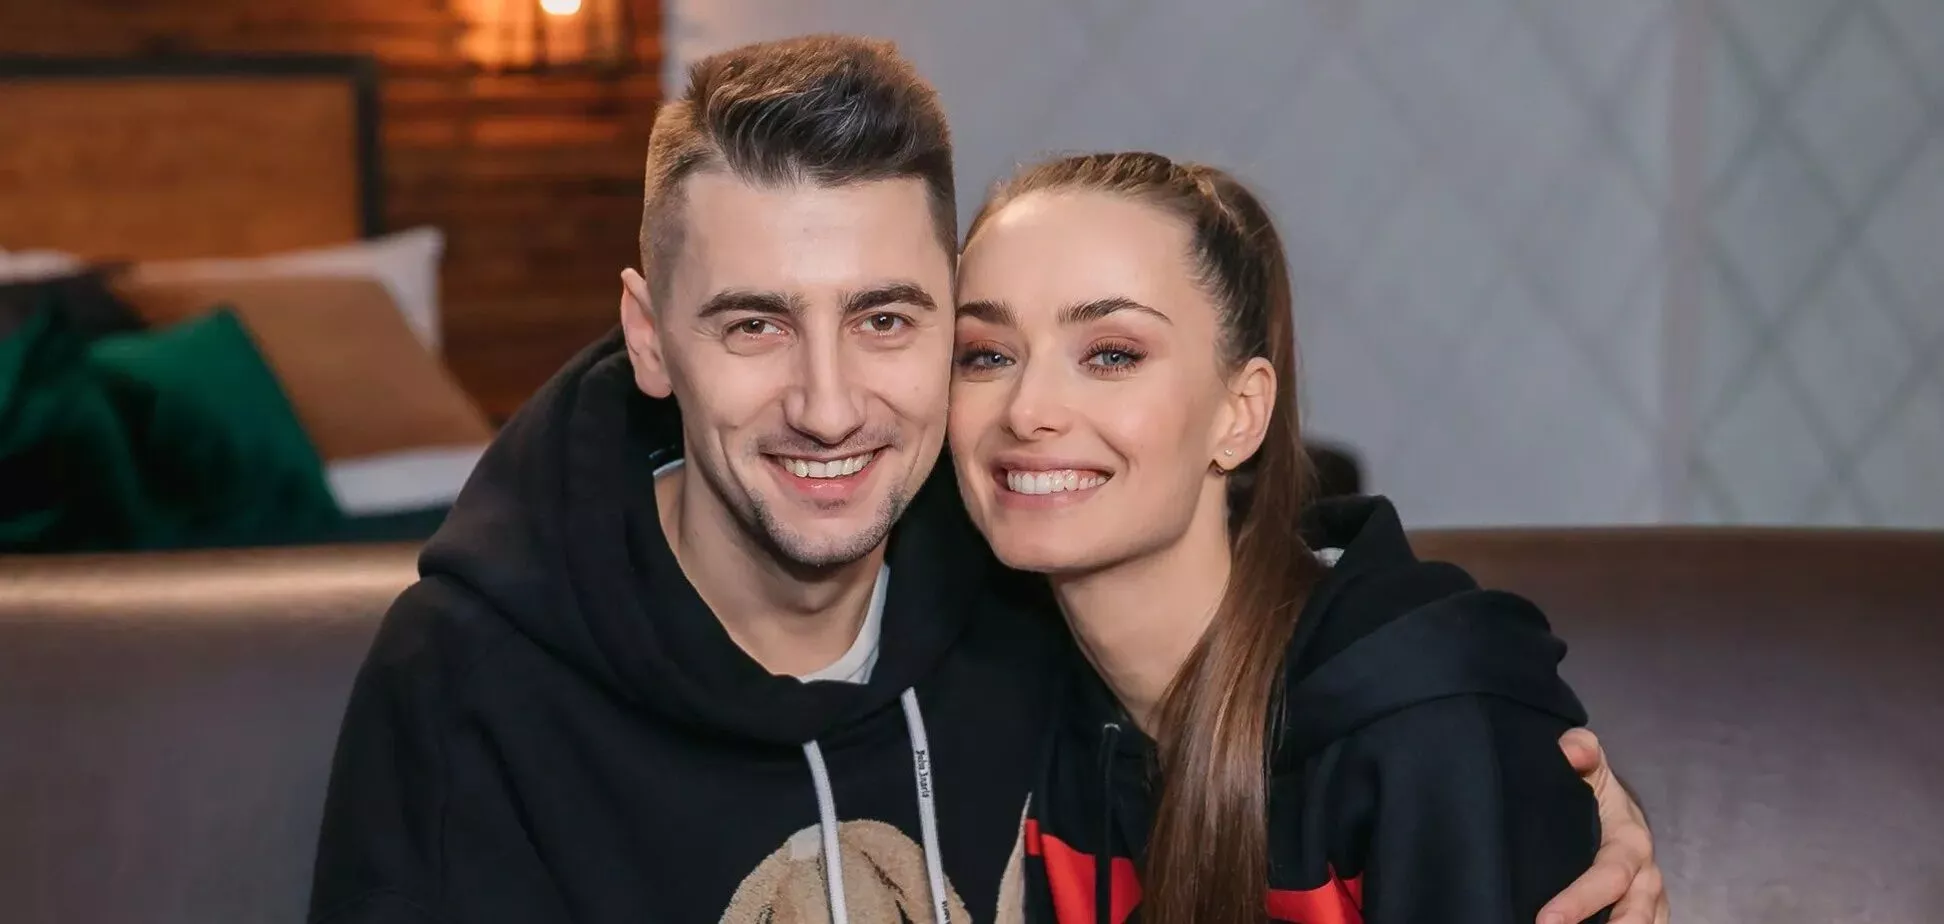 Ксения Мишина и Александр Эллерт отписались друг от друга в Instagram